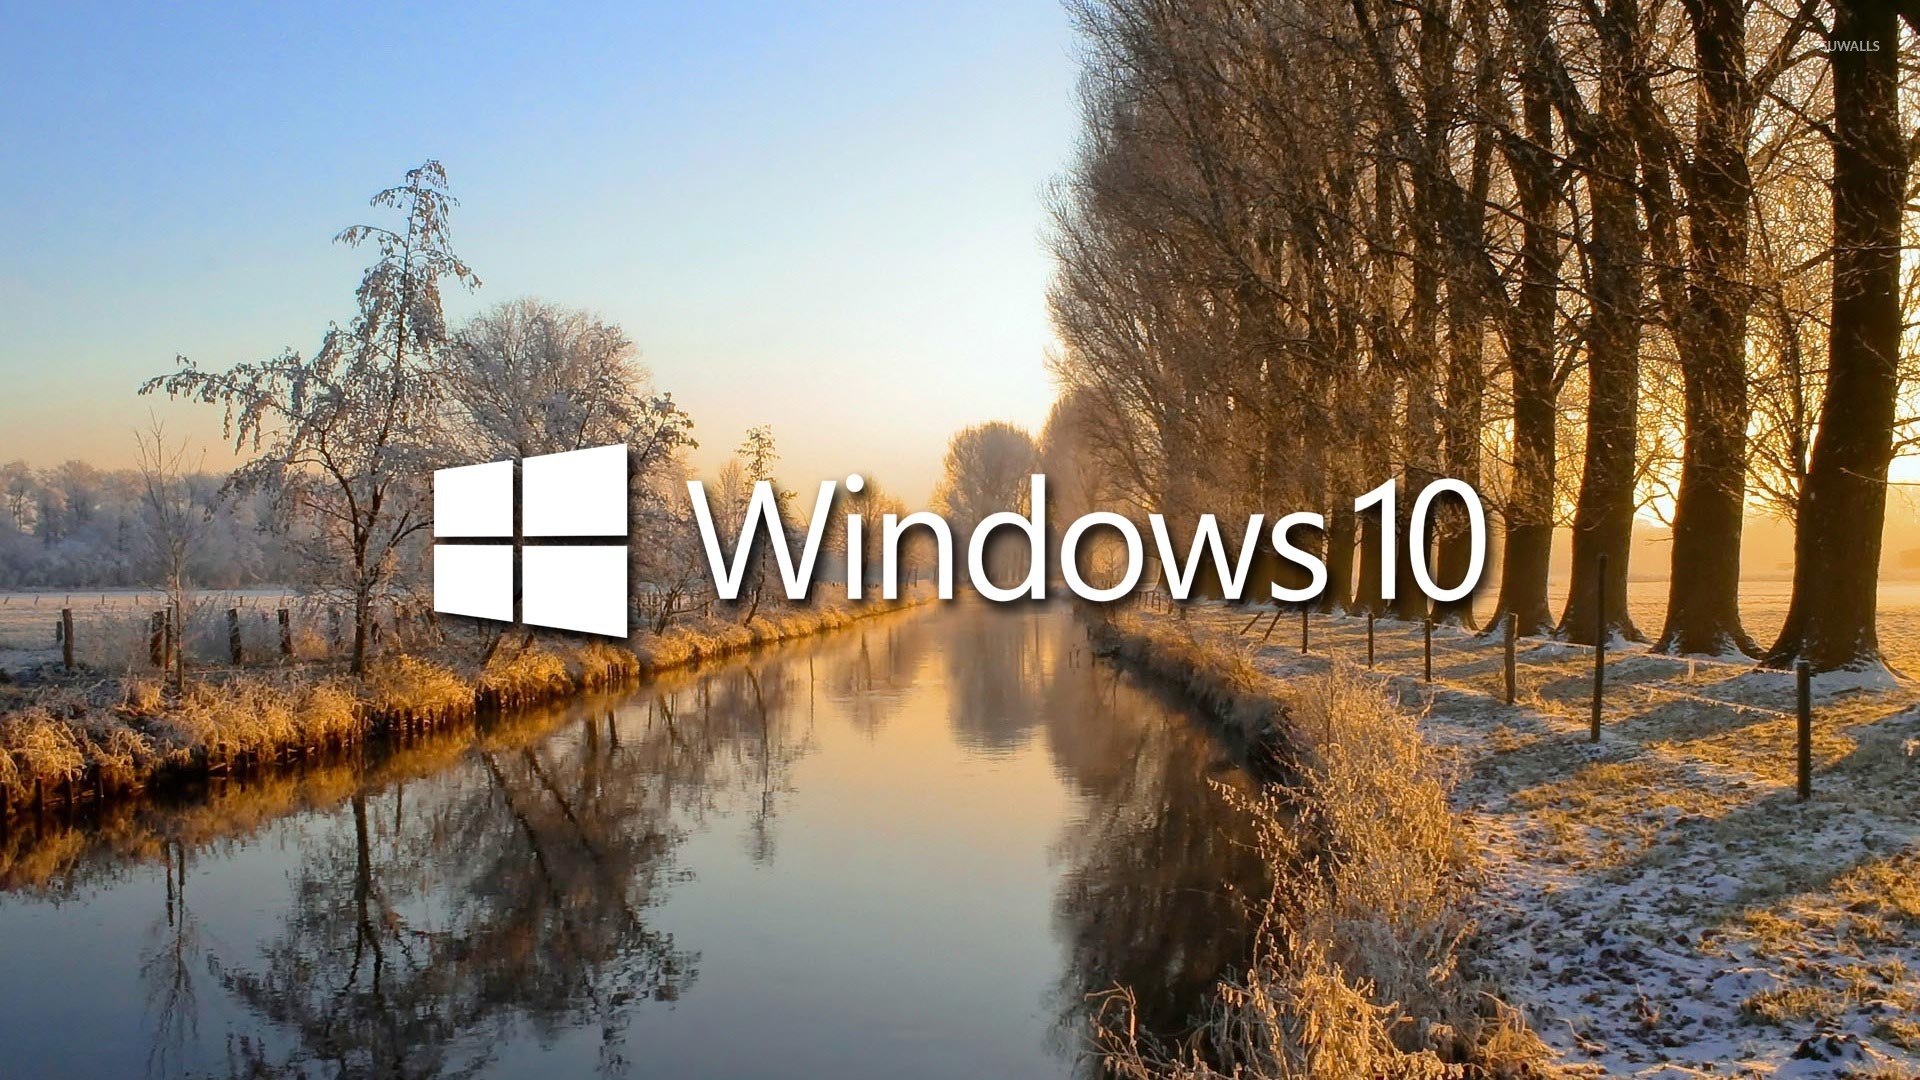 Windows 10 Wallpaper River - 1920x1080 Wallpaper 